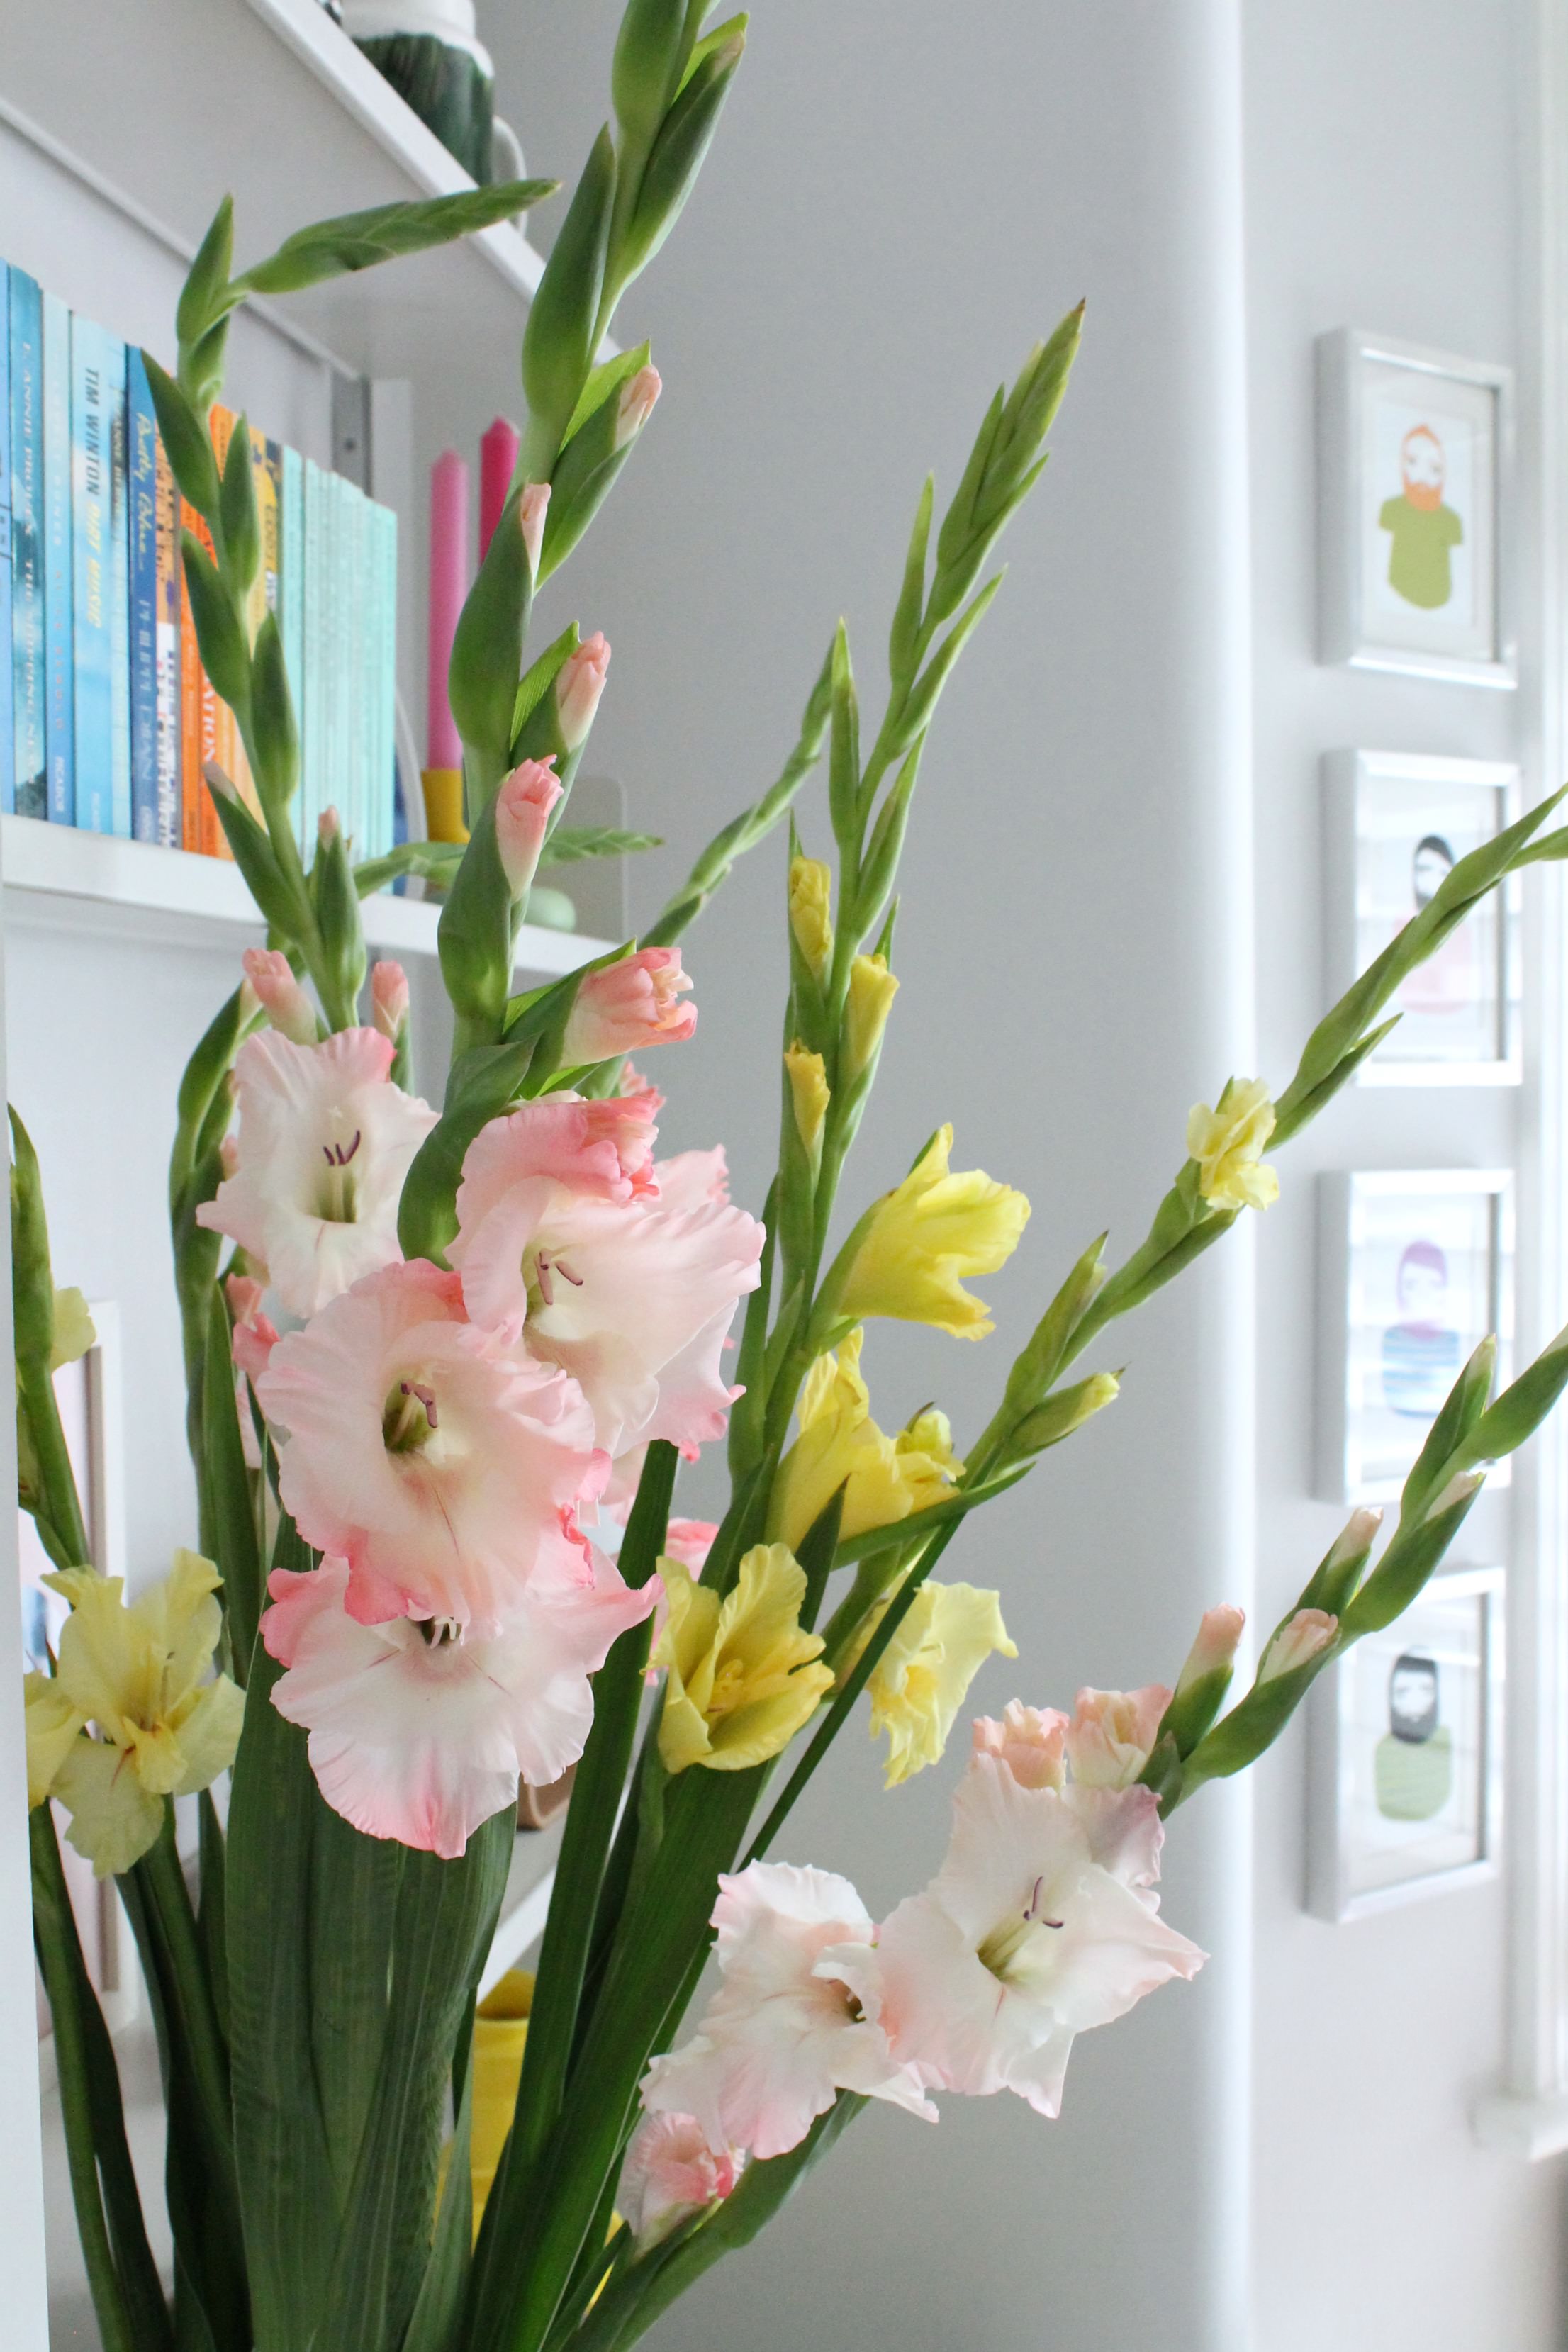 Gladiolus-flowers-photo-by-Geraldine-Tan-Little-Big-Bell